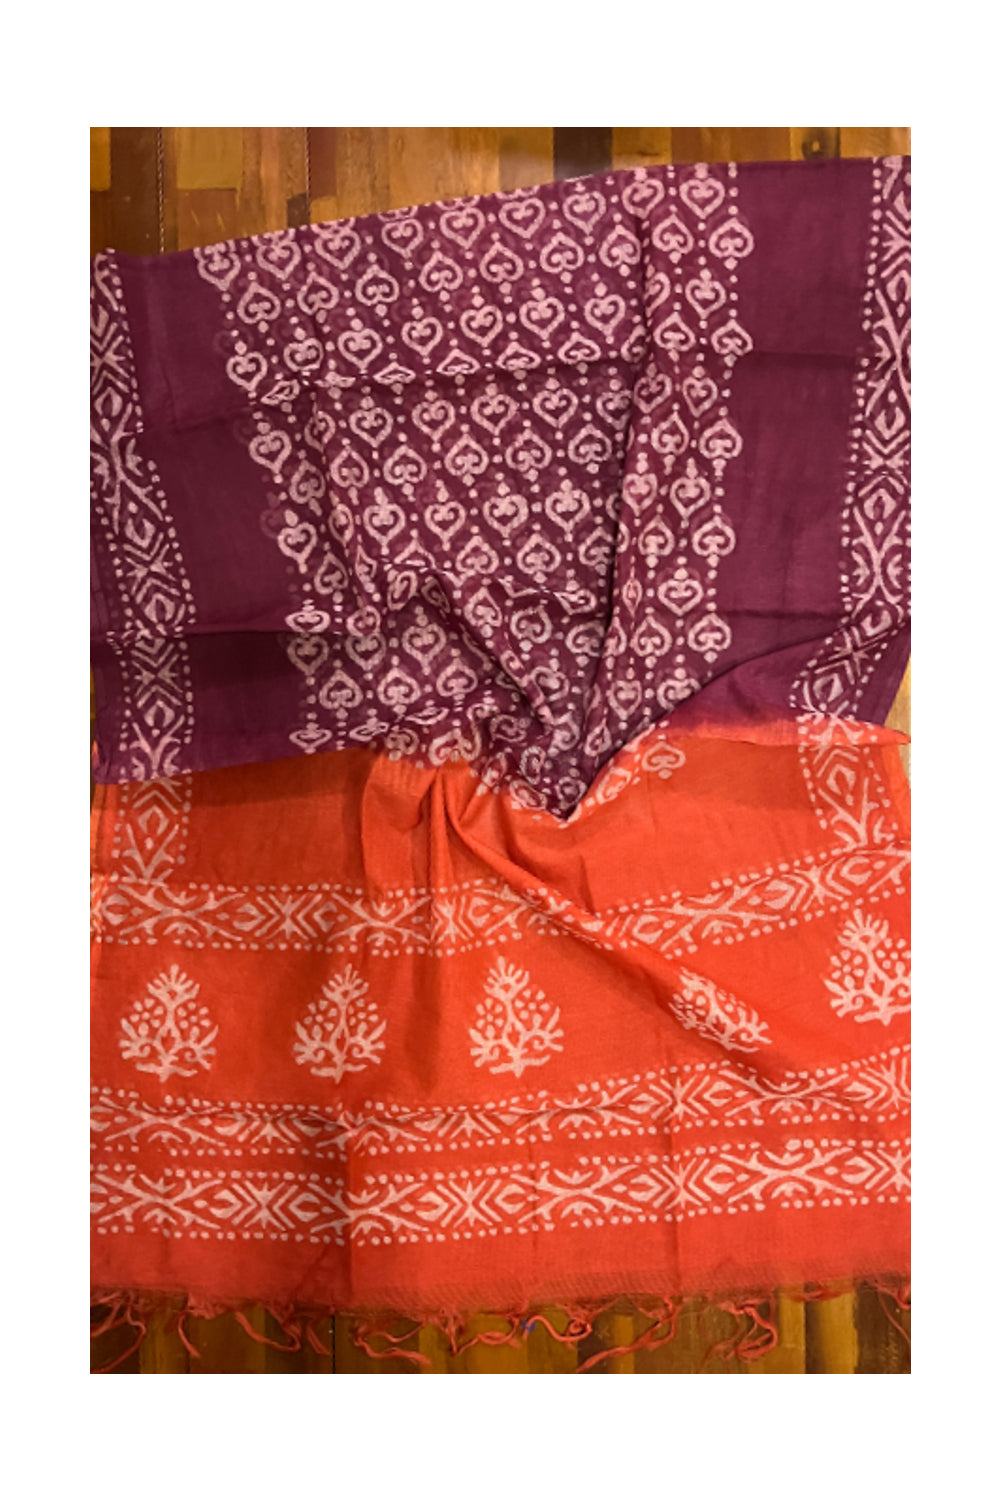 Southloom™ Kota Churidar Salwar Suit Material in Dark Orange with Floral Prints